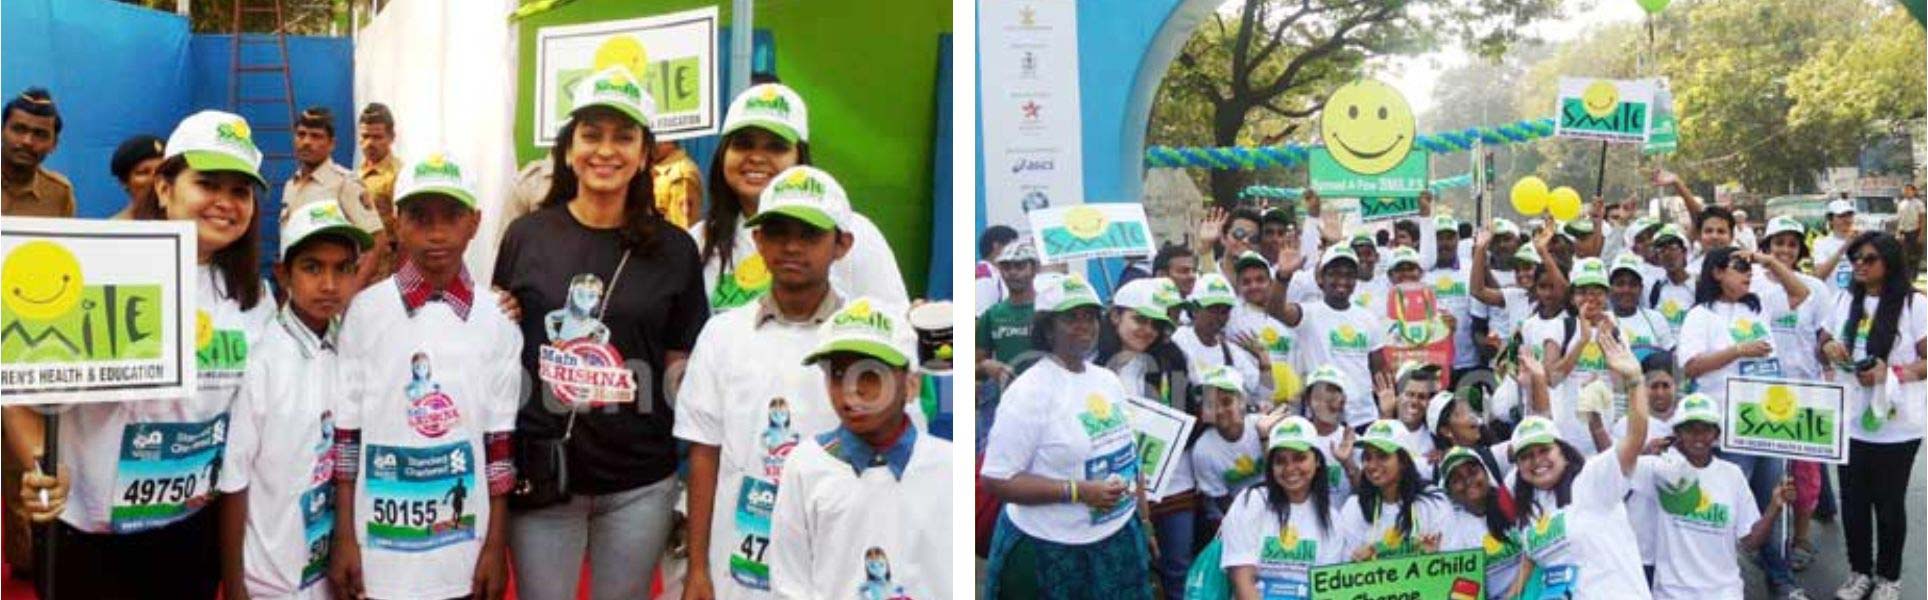 Juhi supports Smile children at Standard Chartered Mumbai Marathon